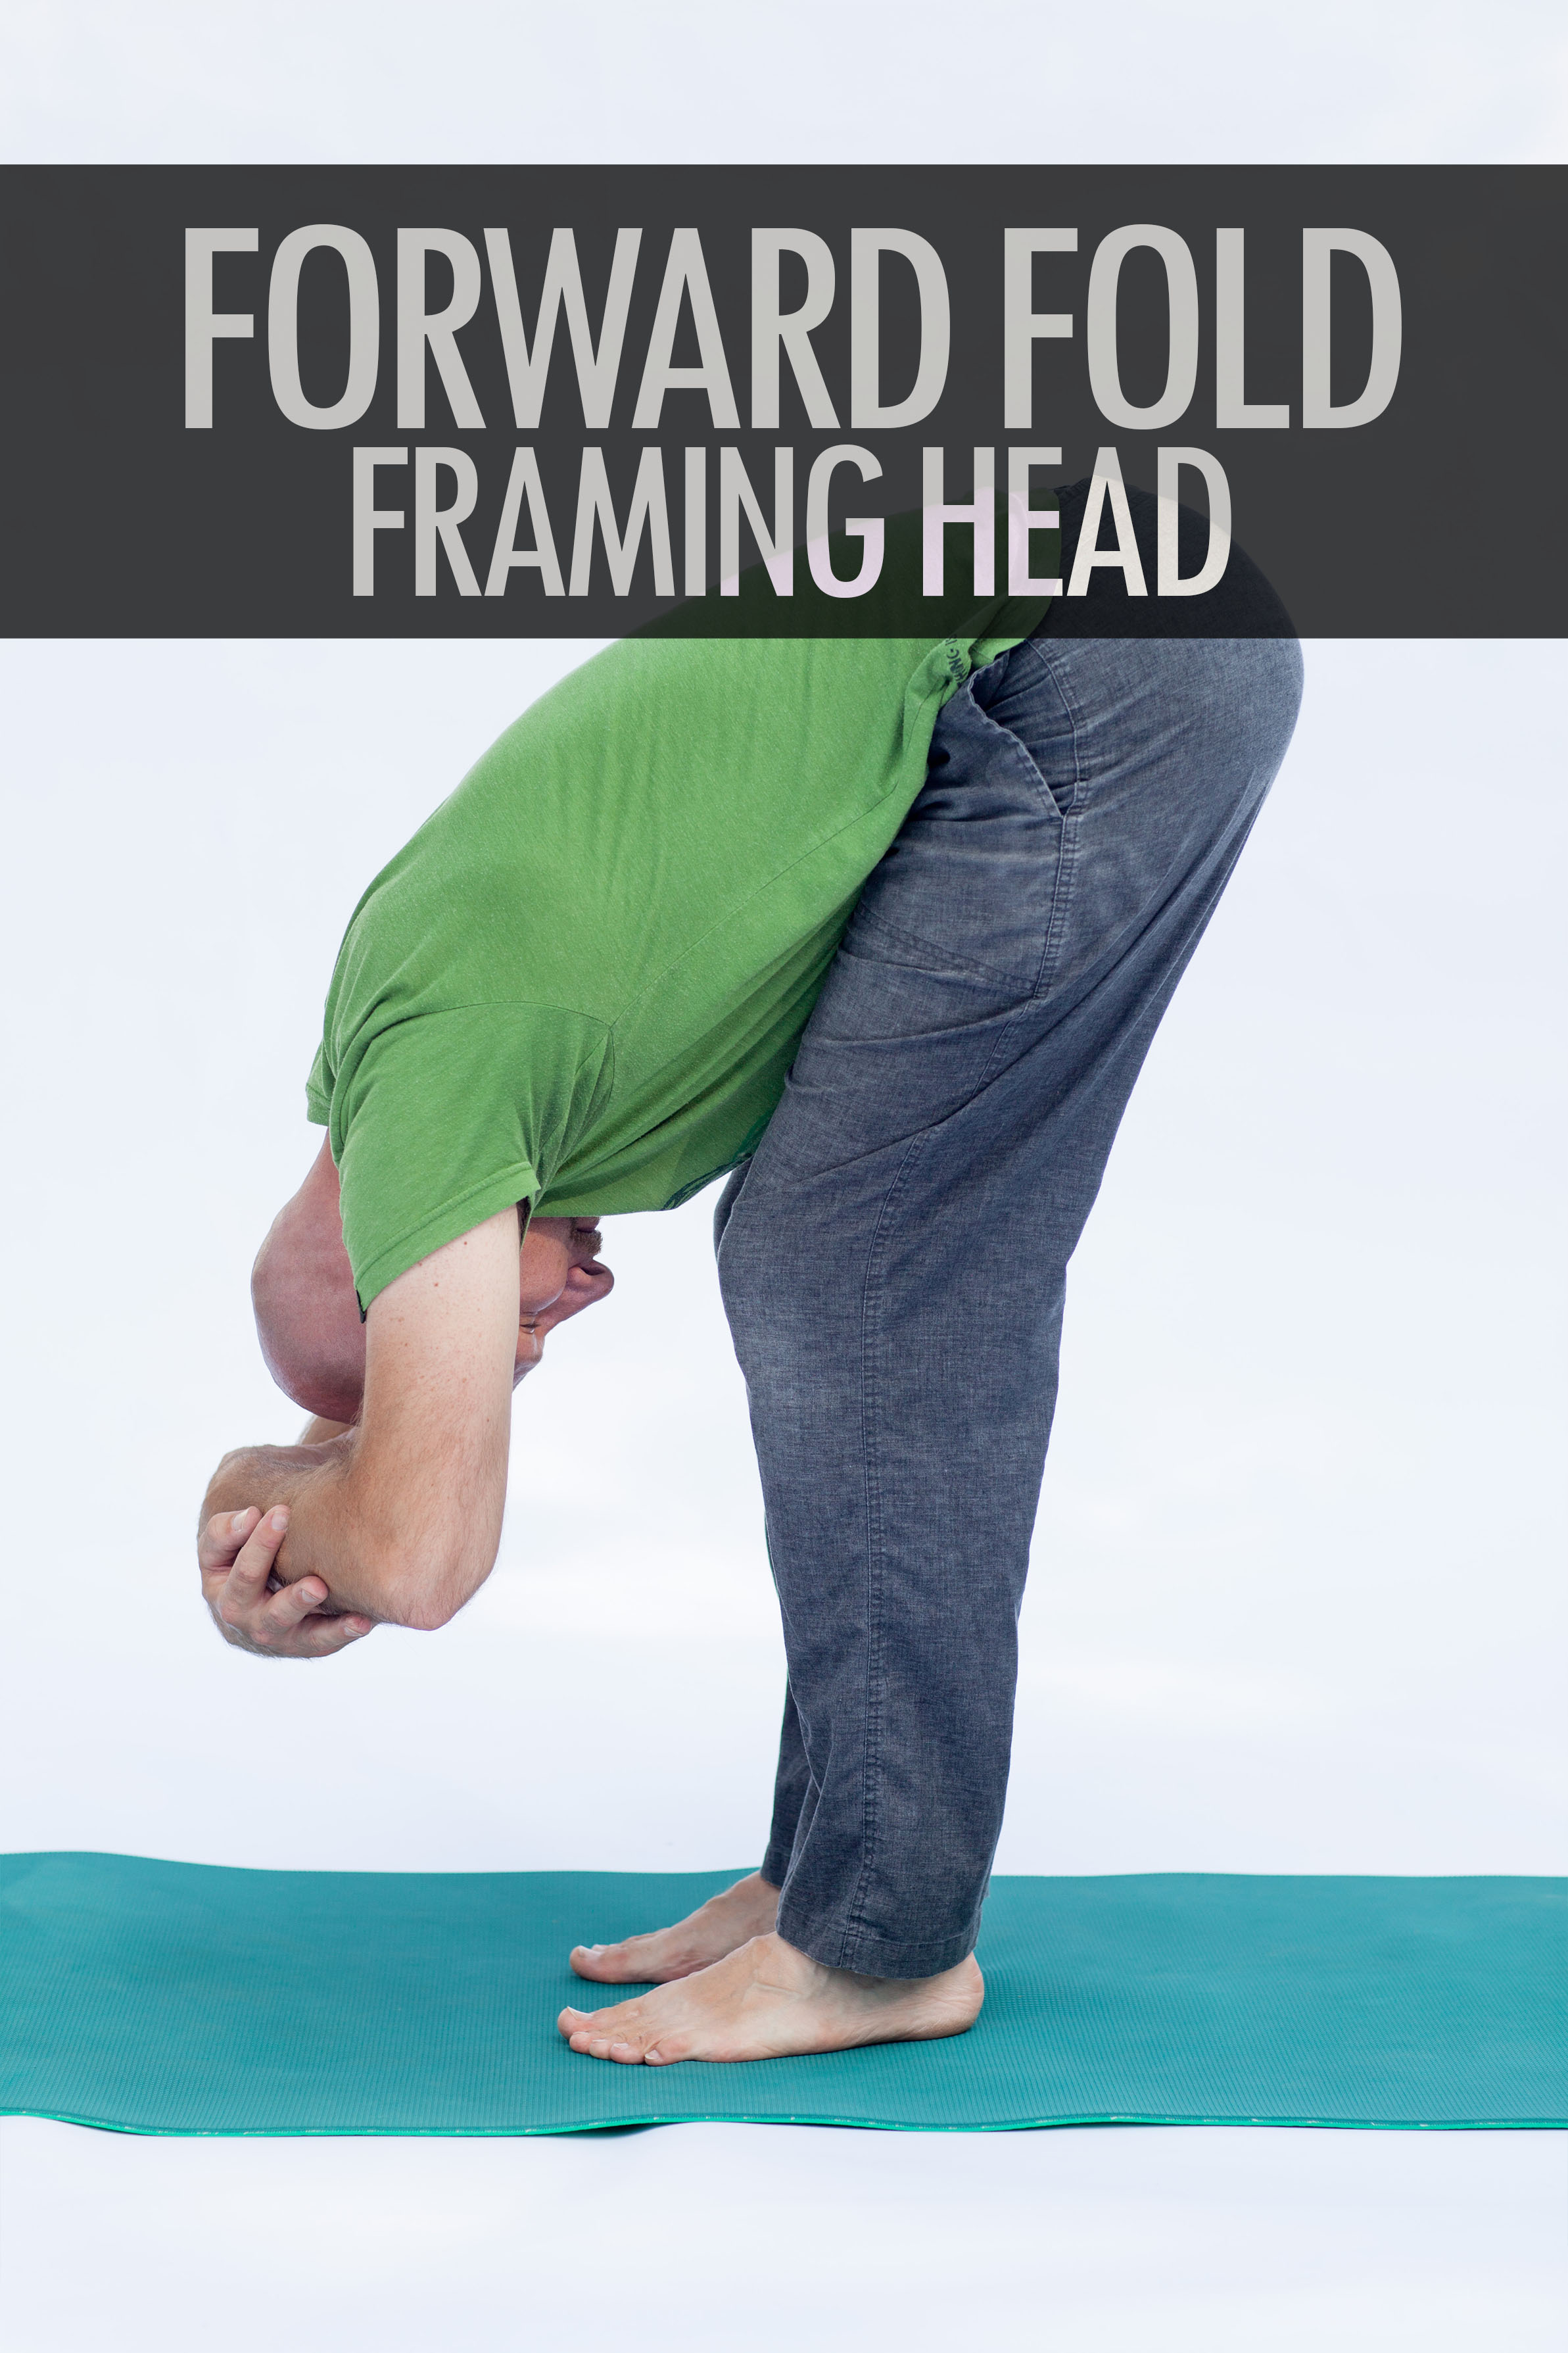 Framing Head Forward Fold 2.jpg